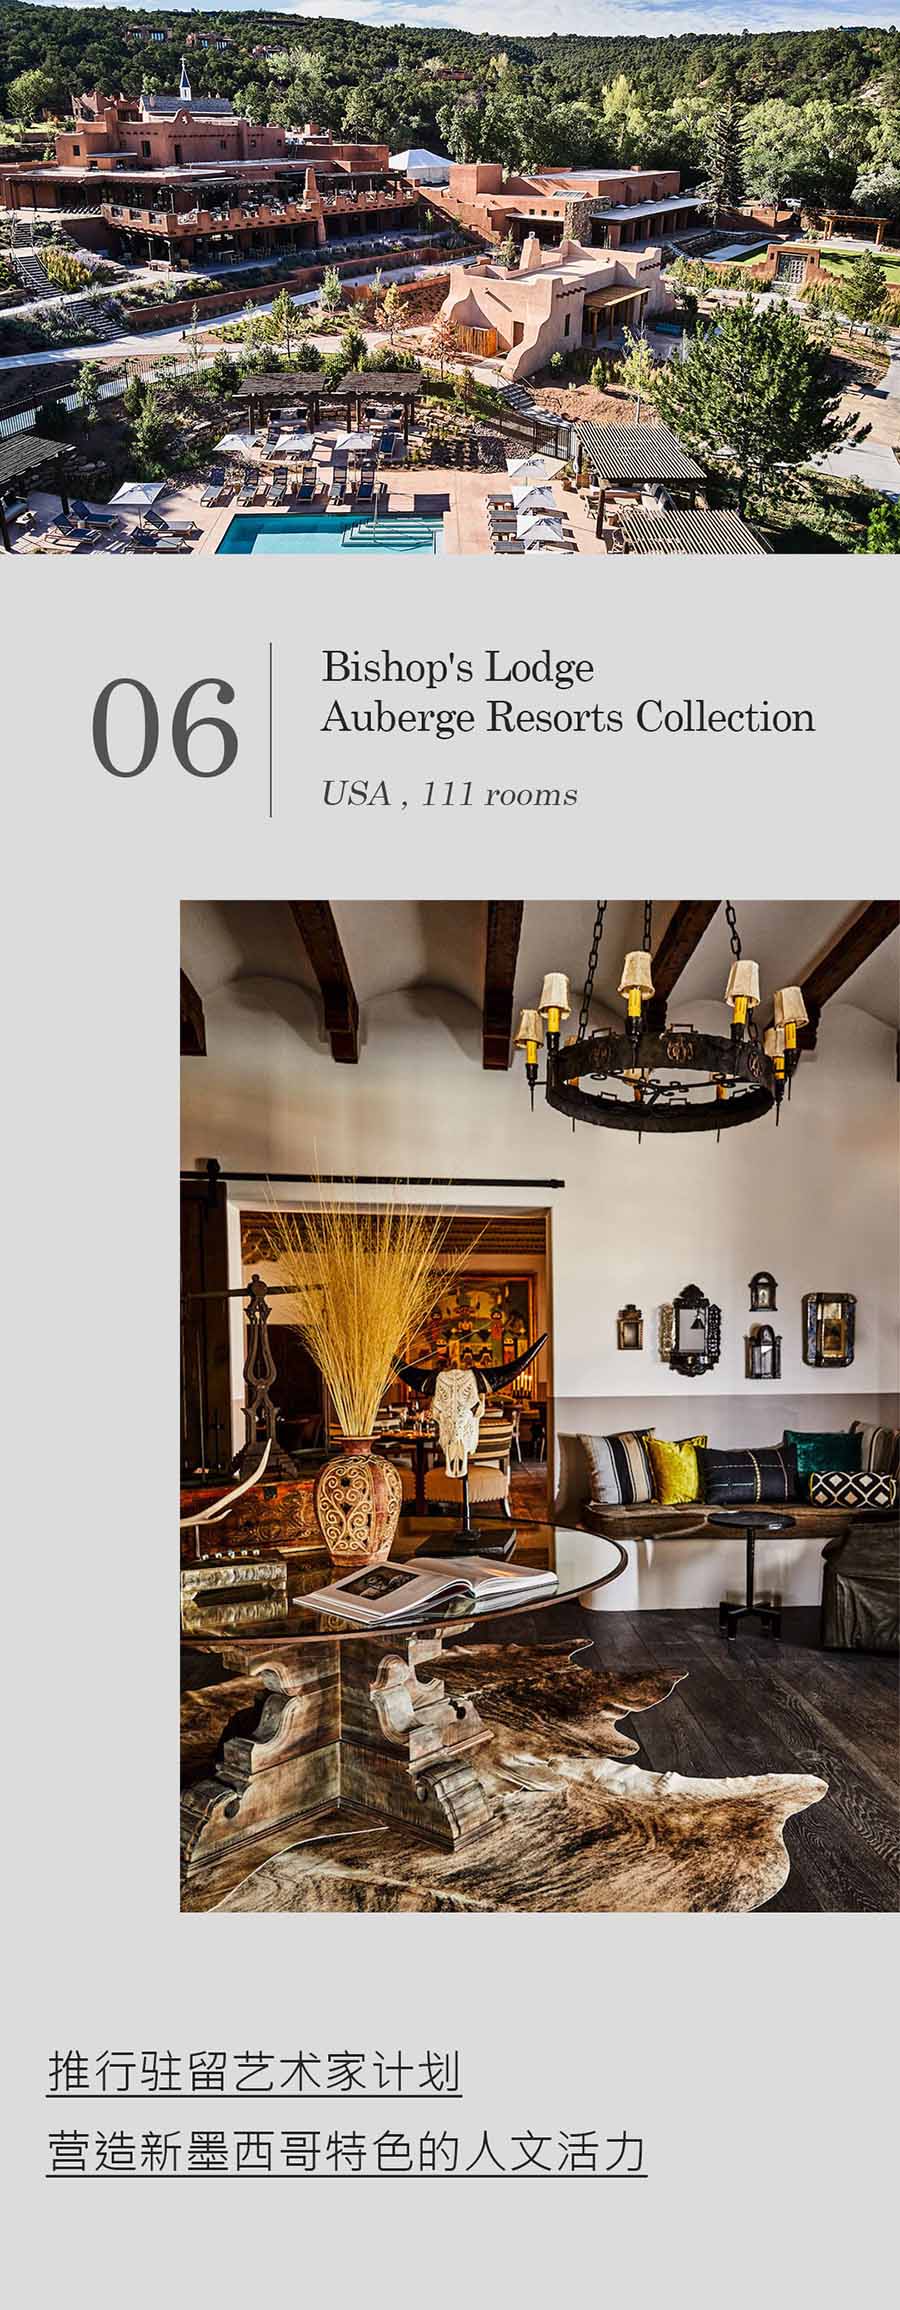 06 Bishop’s Lodge, Auberge Resorts Collection